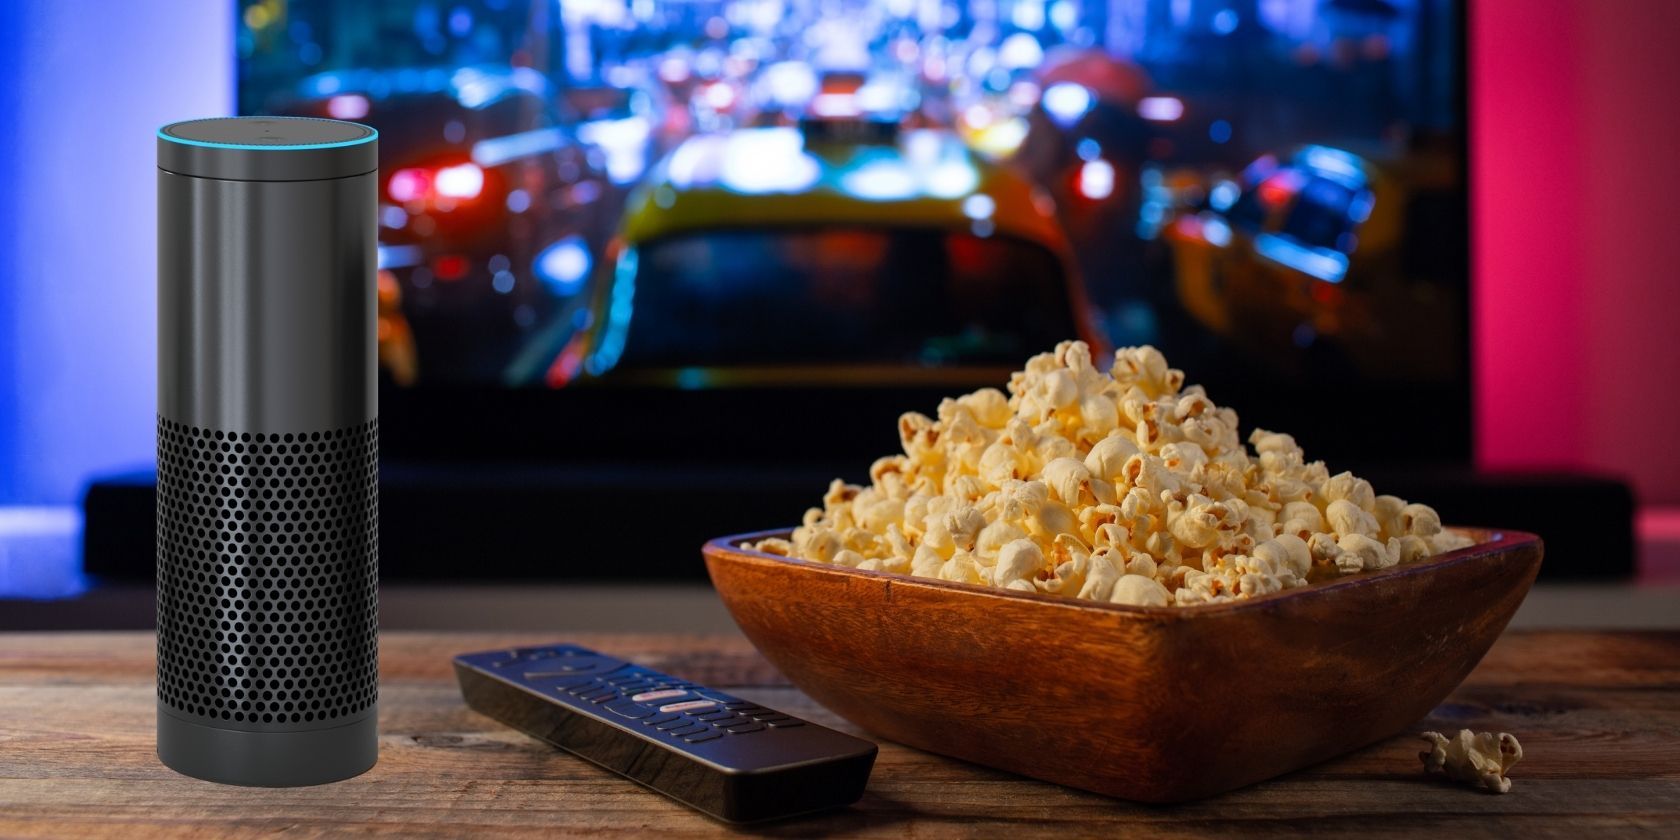 Popcorn and Tv with Amazon Alexa Echo device